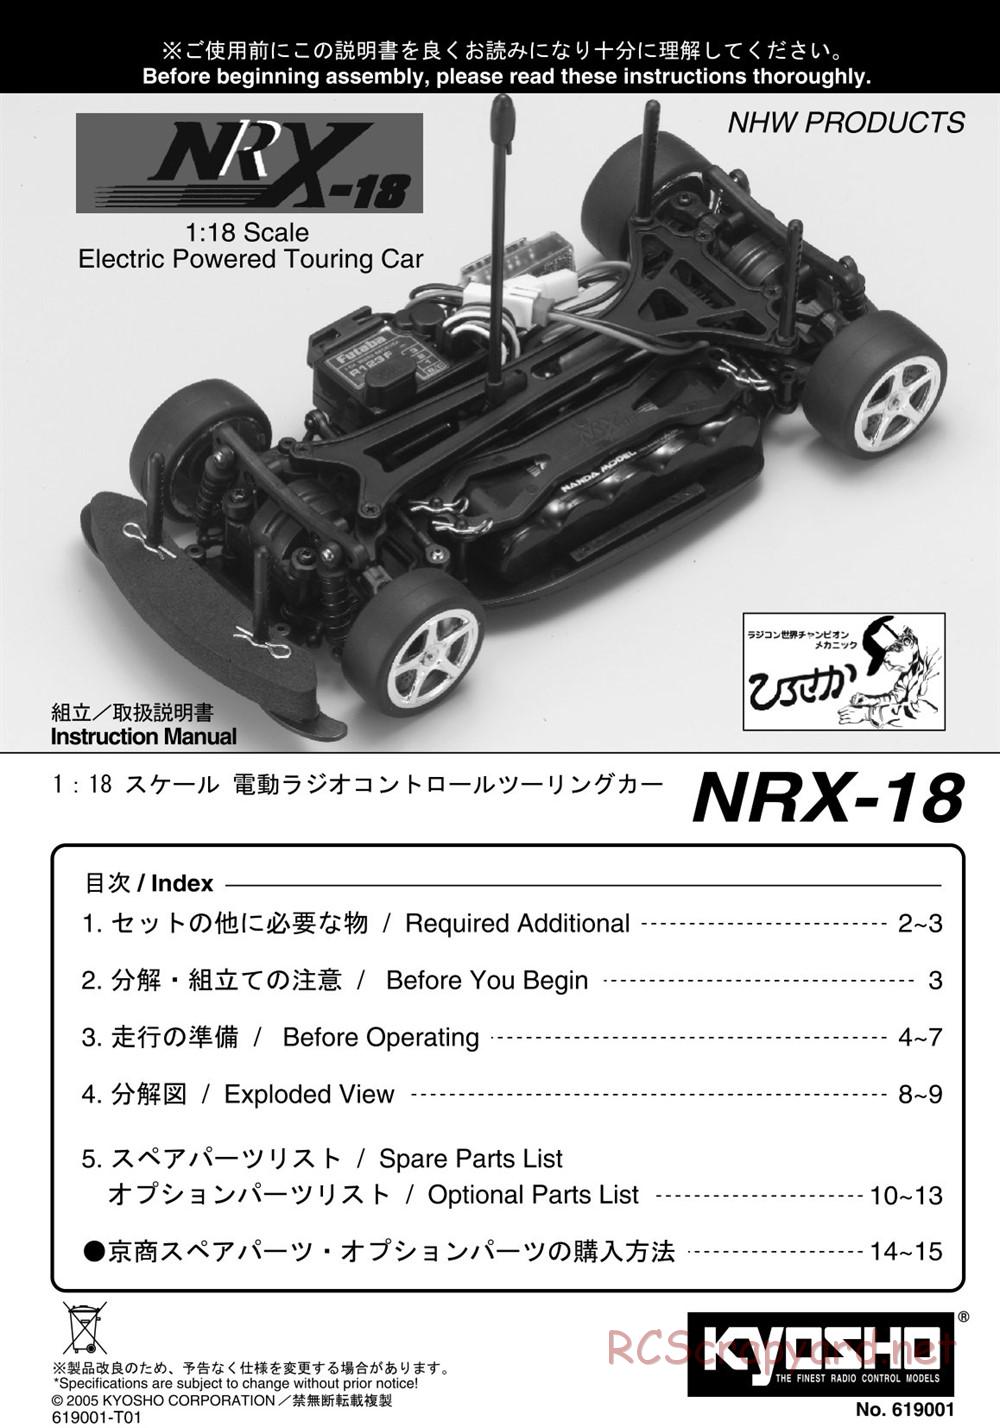 Kyosho - NRX-18 - Manual - Page 1